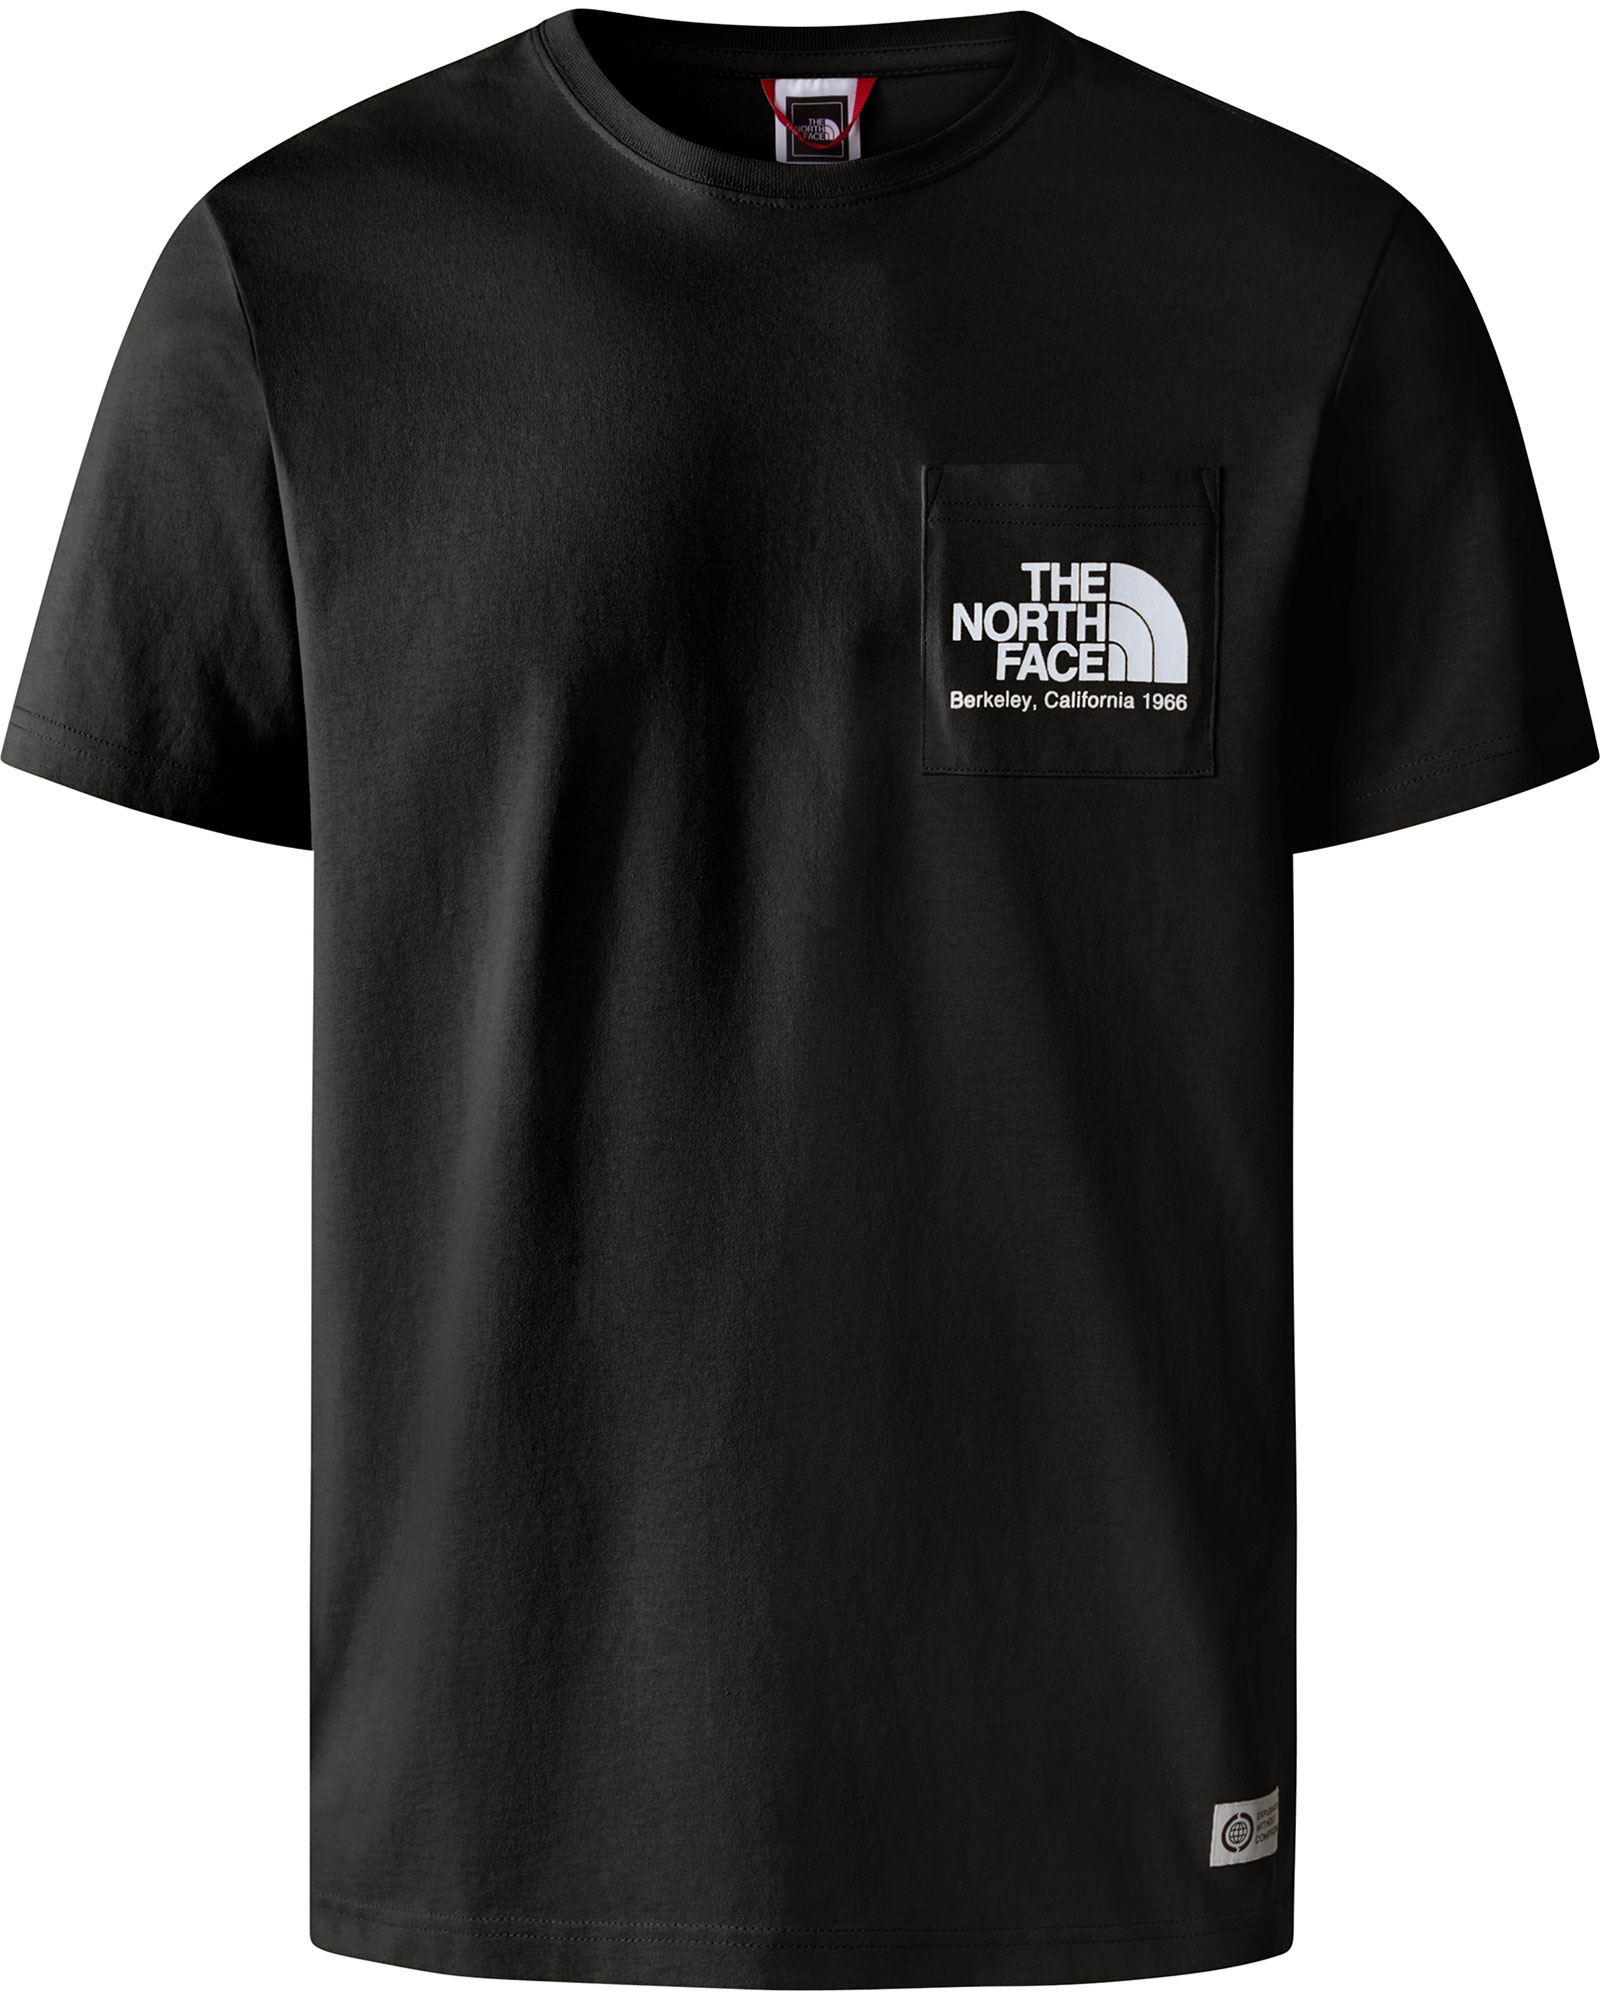 The North Face Men’s Berkeley California Pocket T Shirt - TNF Black XL